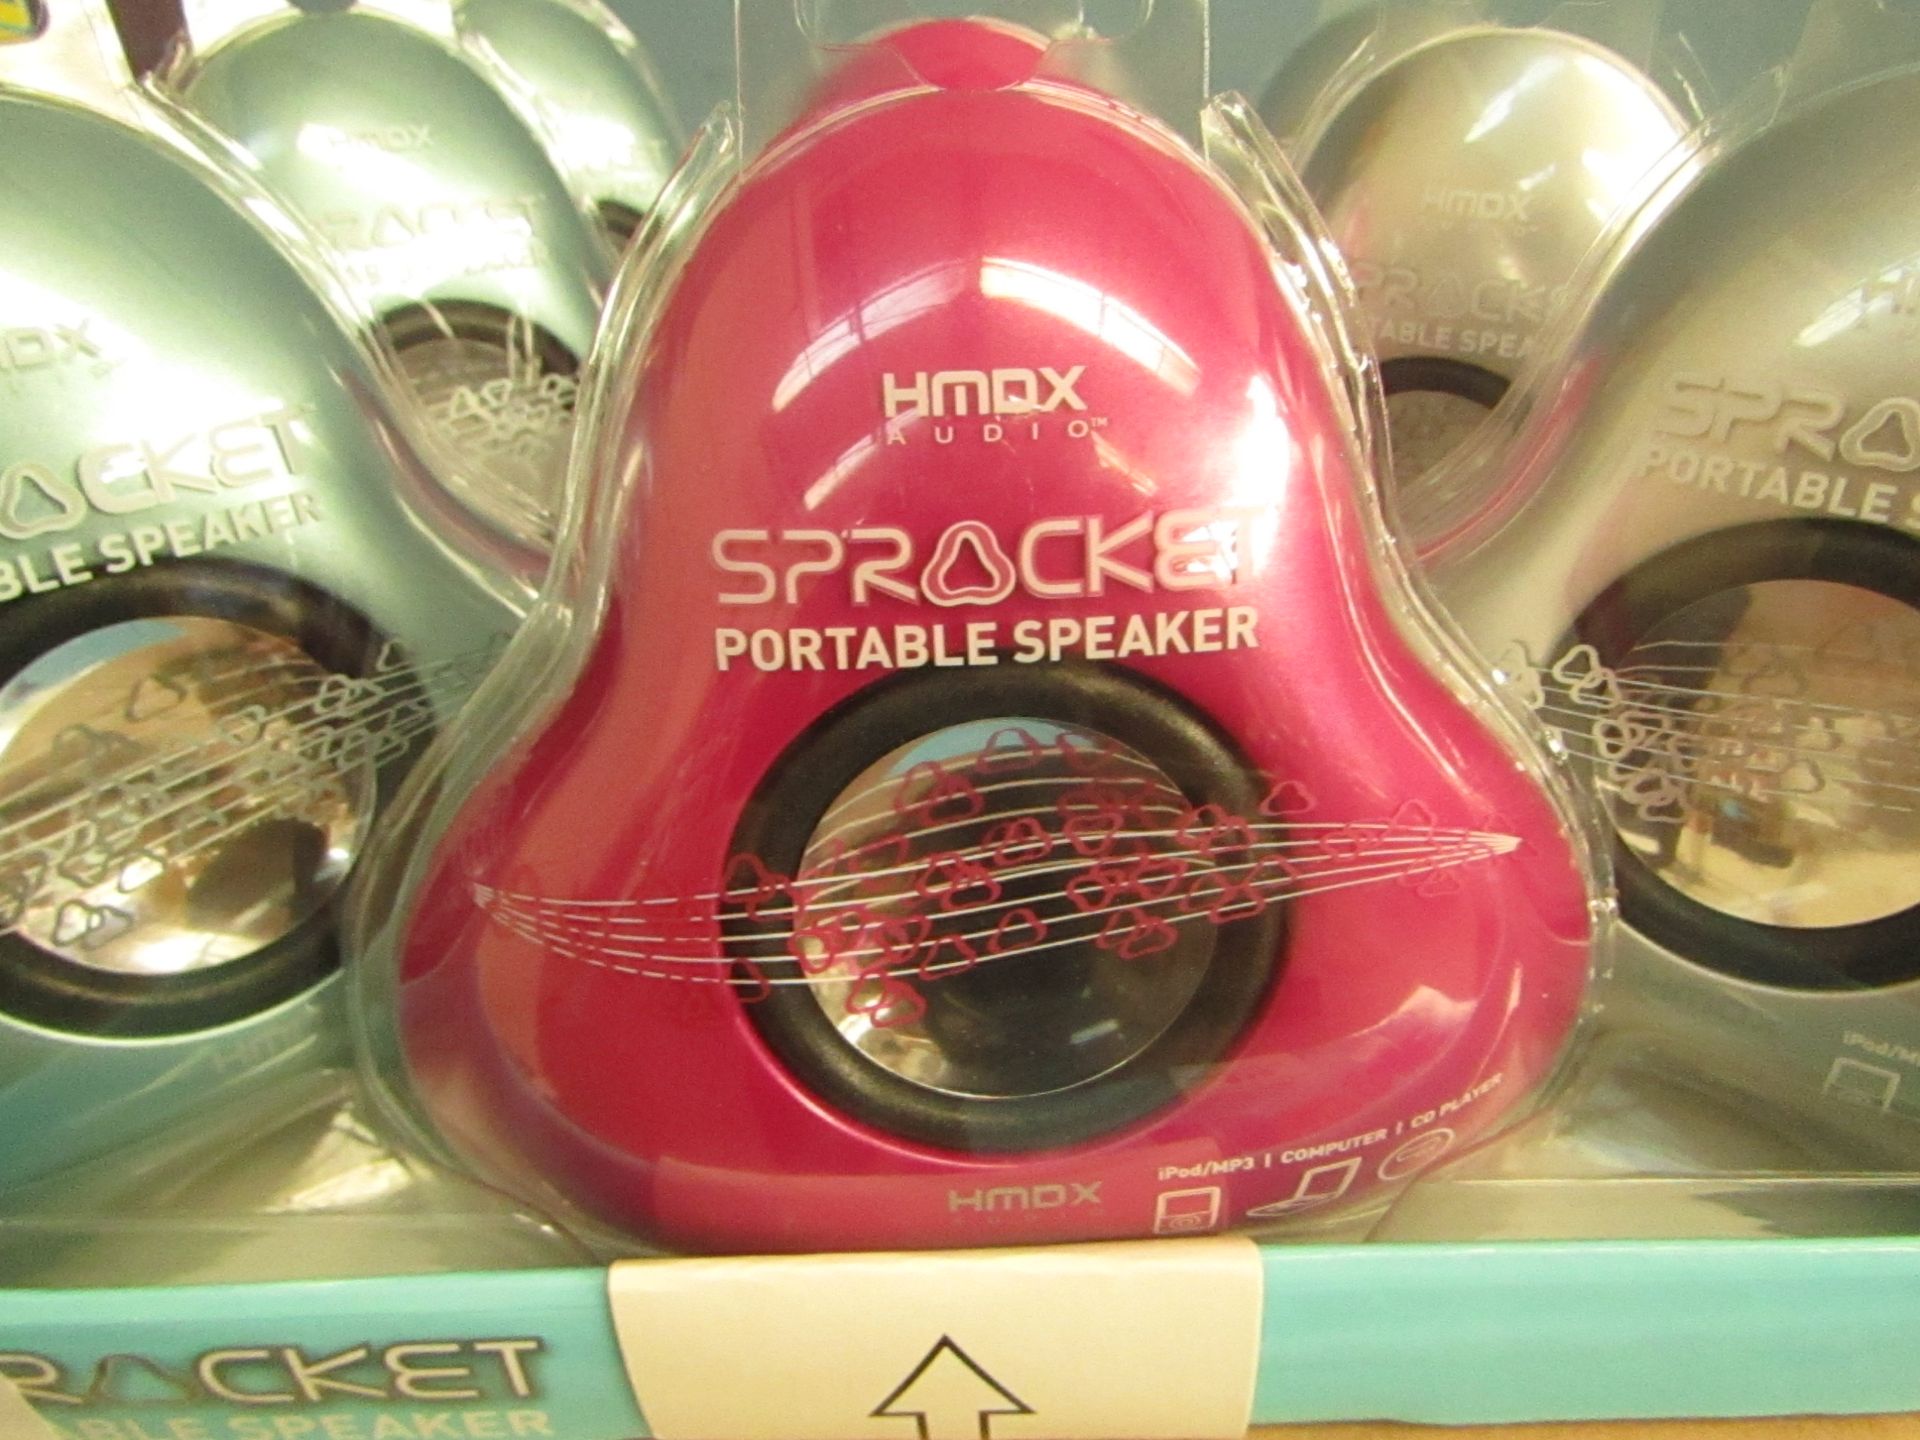 HMDX Audio - Sprocket Portable Speaker - Unused & Packaged. Note Picked at Random